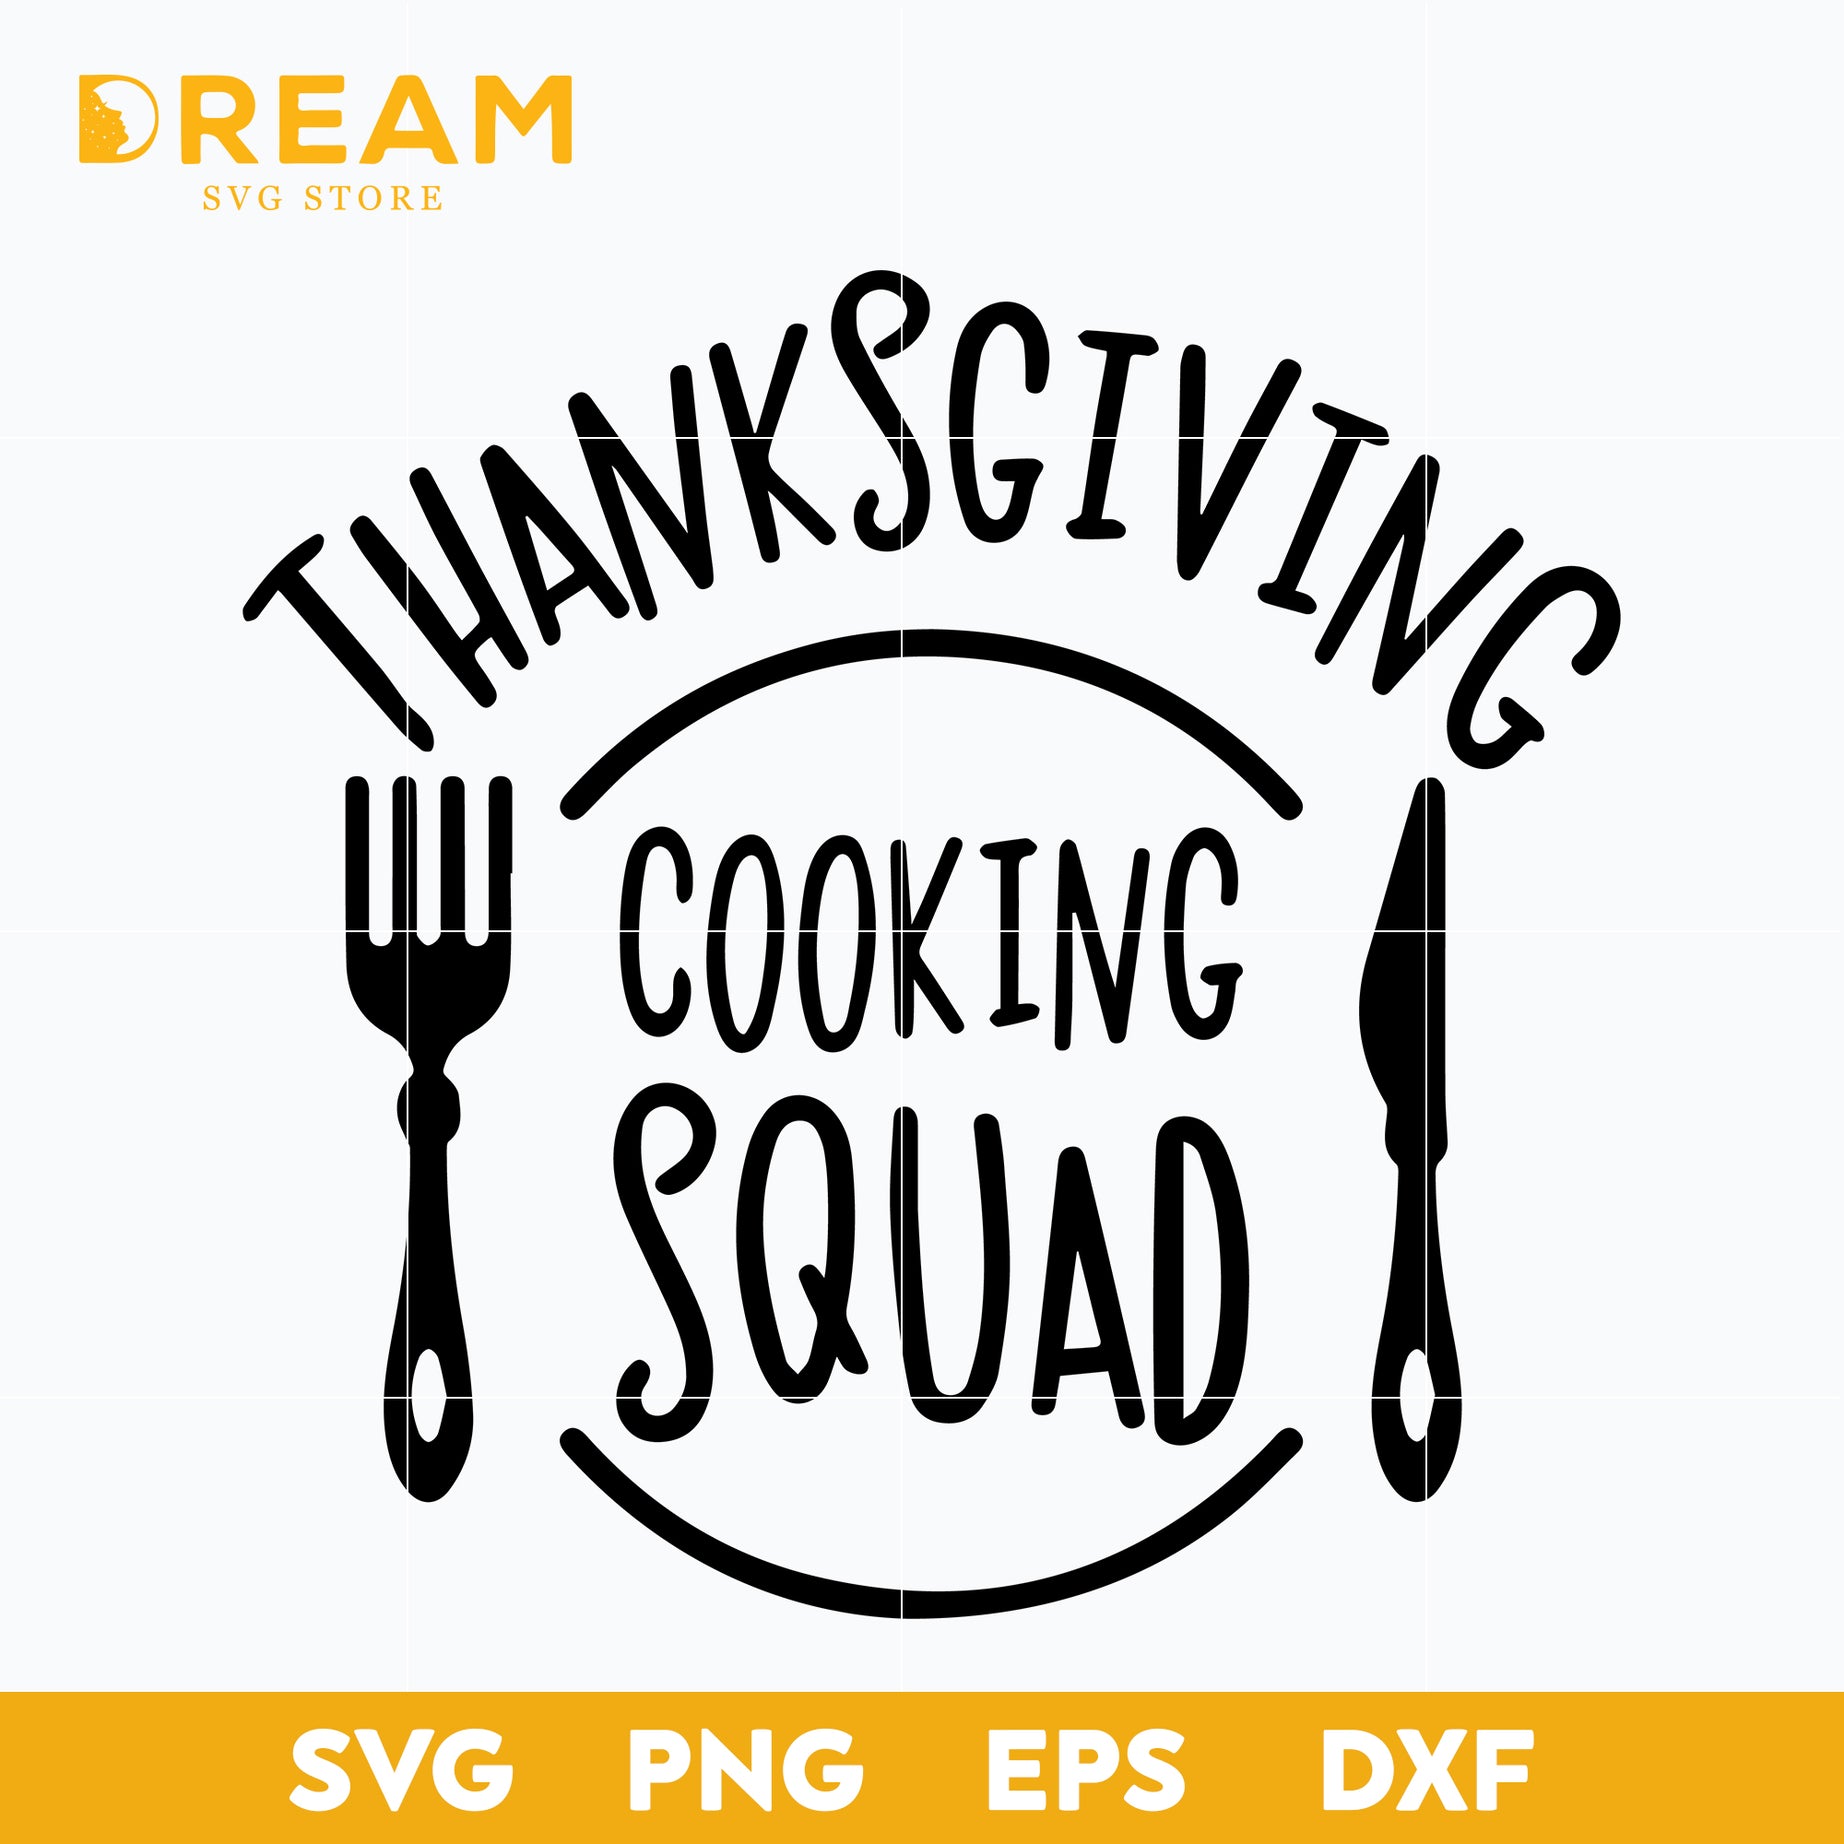 Thanksgiving cooking squad svg, thanksgiving day svg, png, dxf, eps digital file TGV04112012L